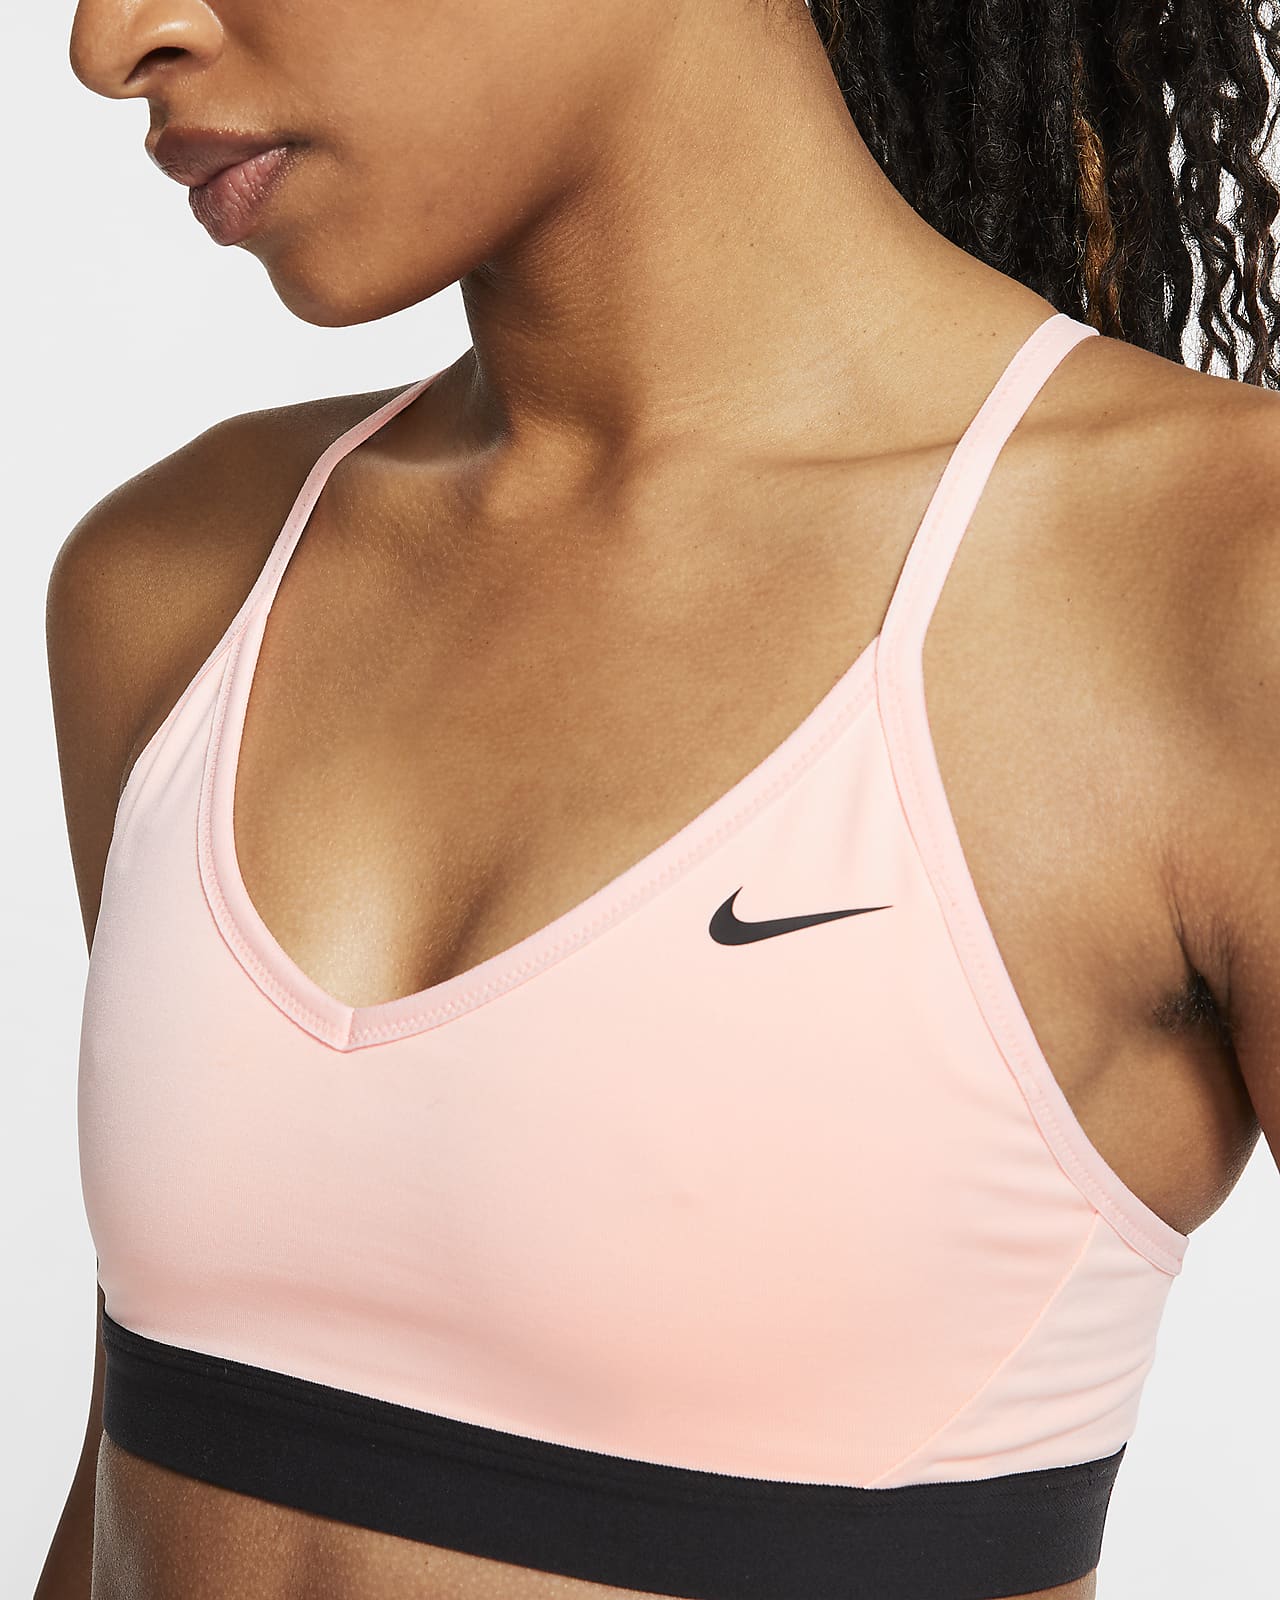 the sports bra